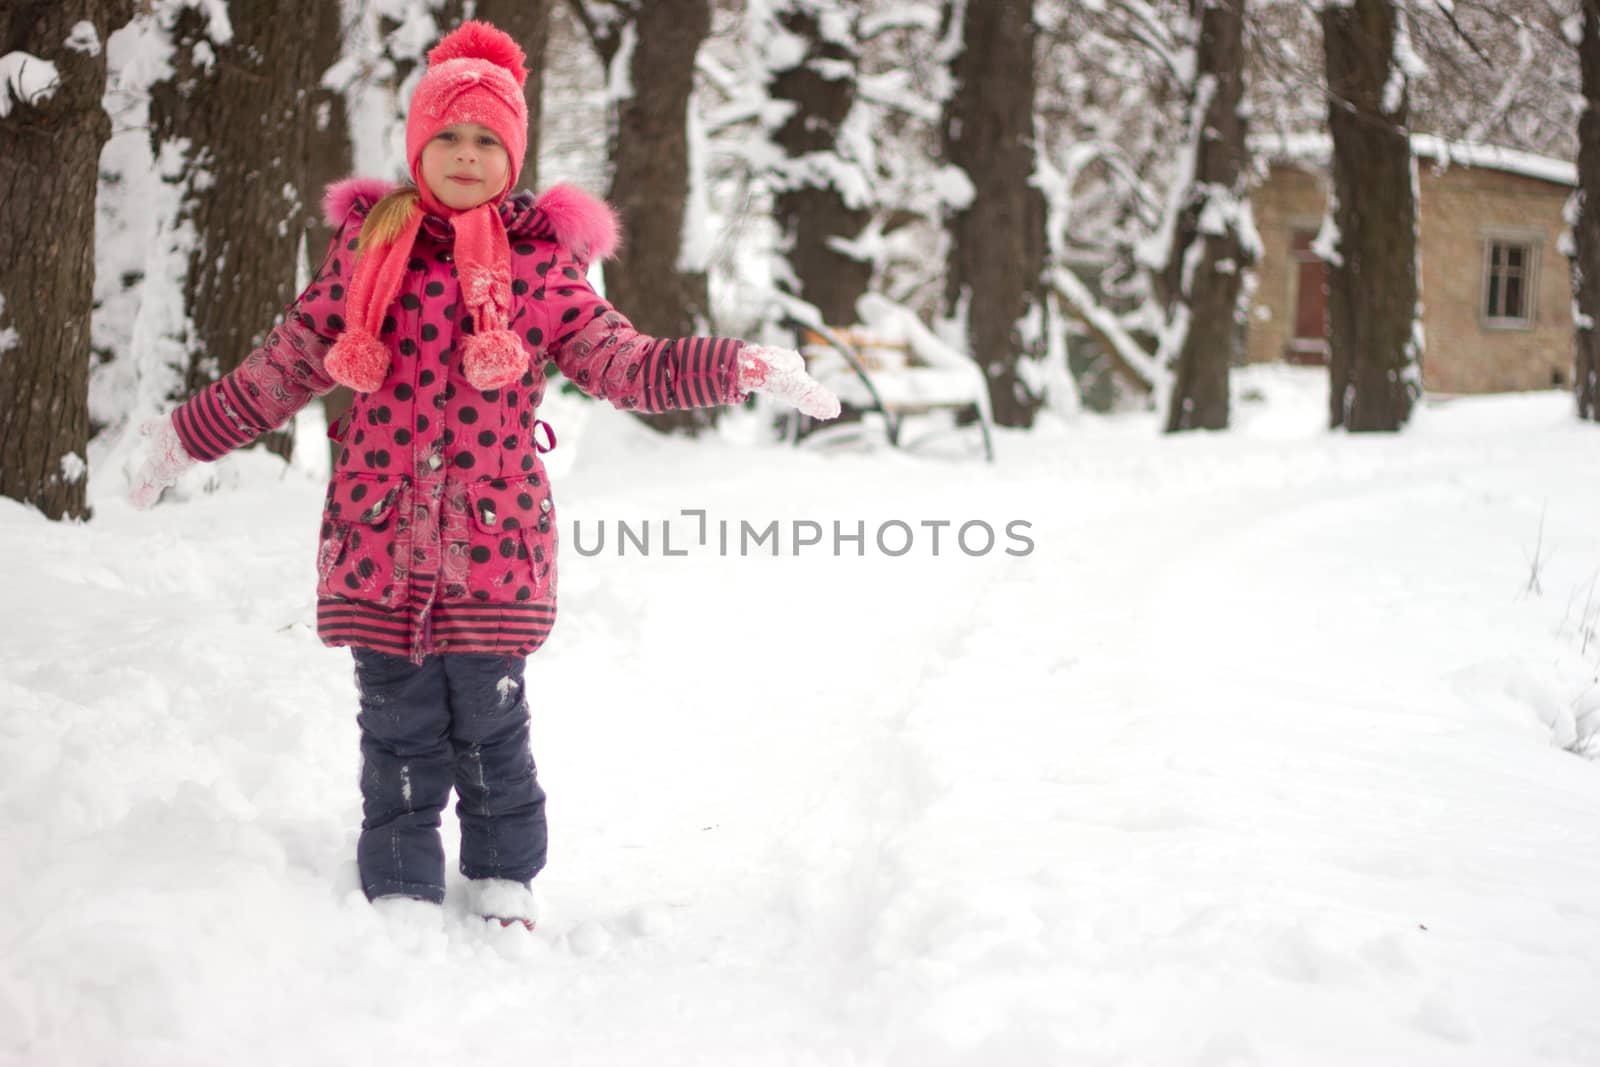 Little girl in winter pink hat in snow.